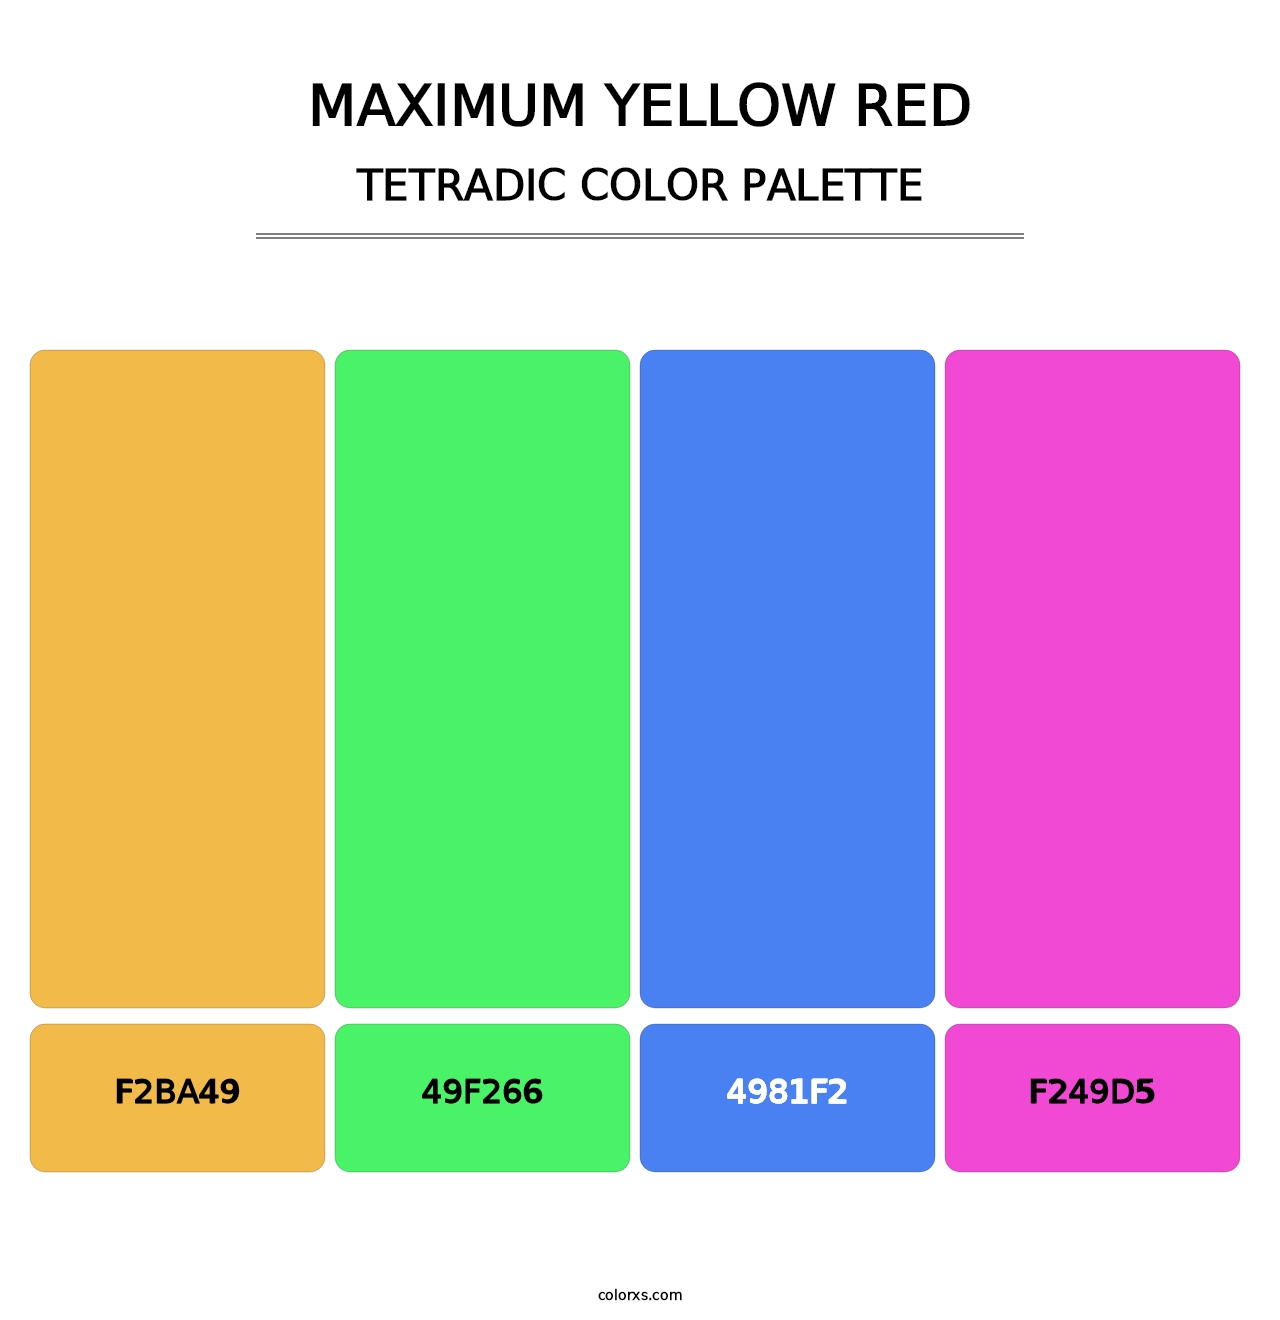 Maximum Yellow Red - Tetradic Color Palette